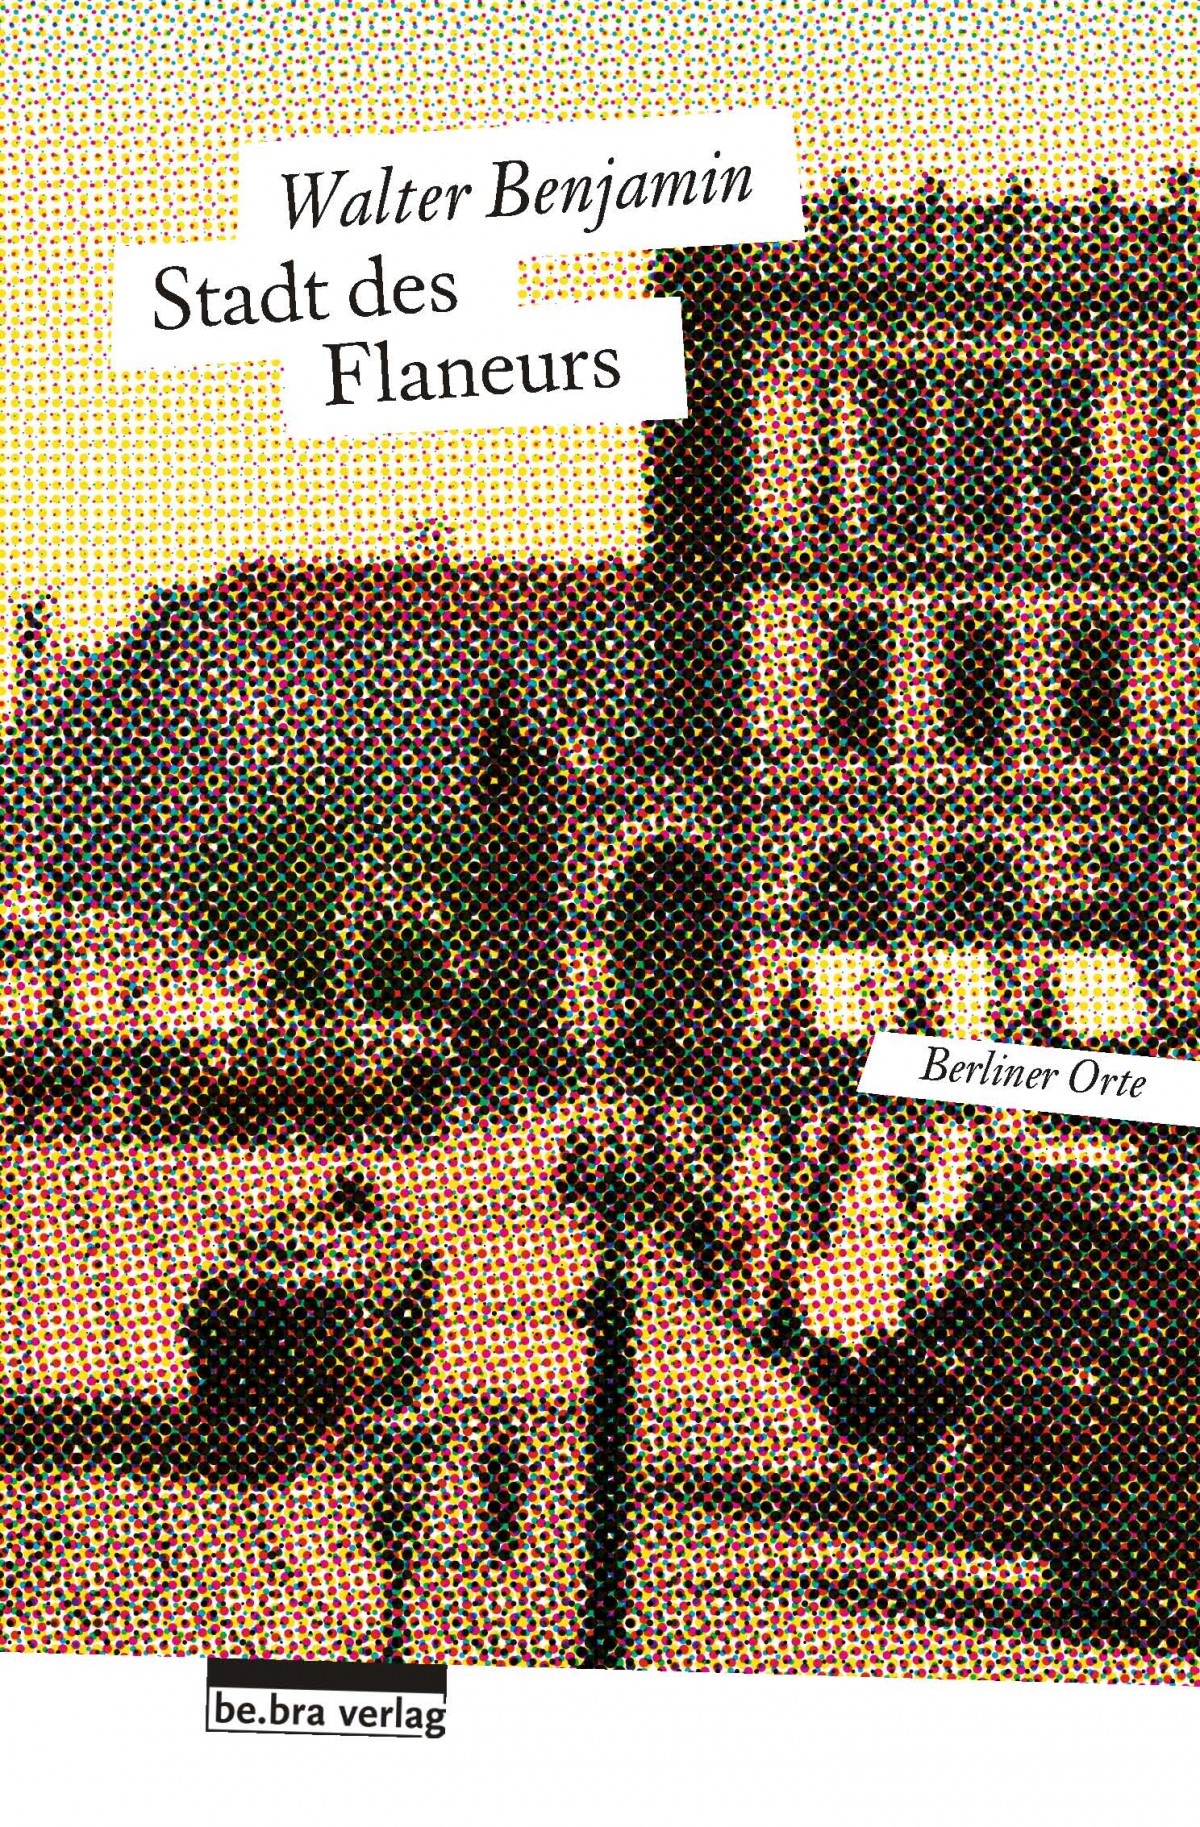 "Stadt des Flaneurs" von Walter Benjamin - Berliner Orte